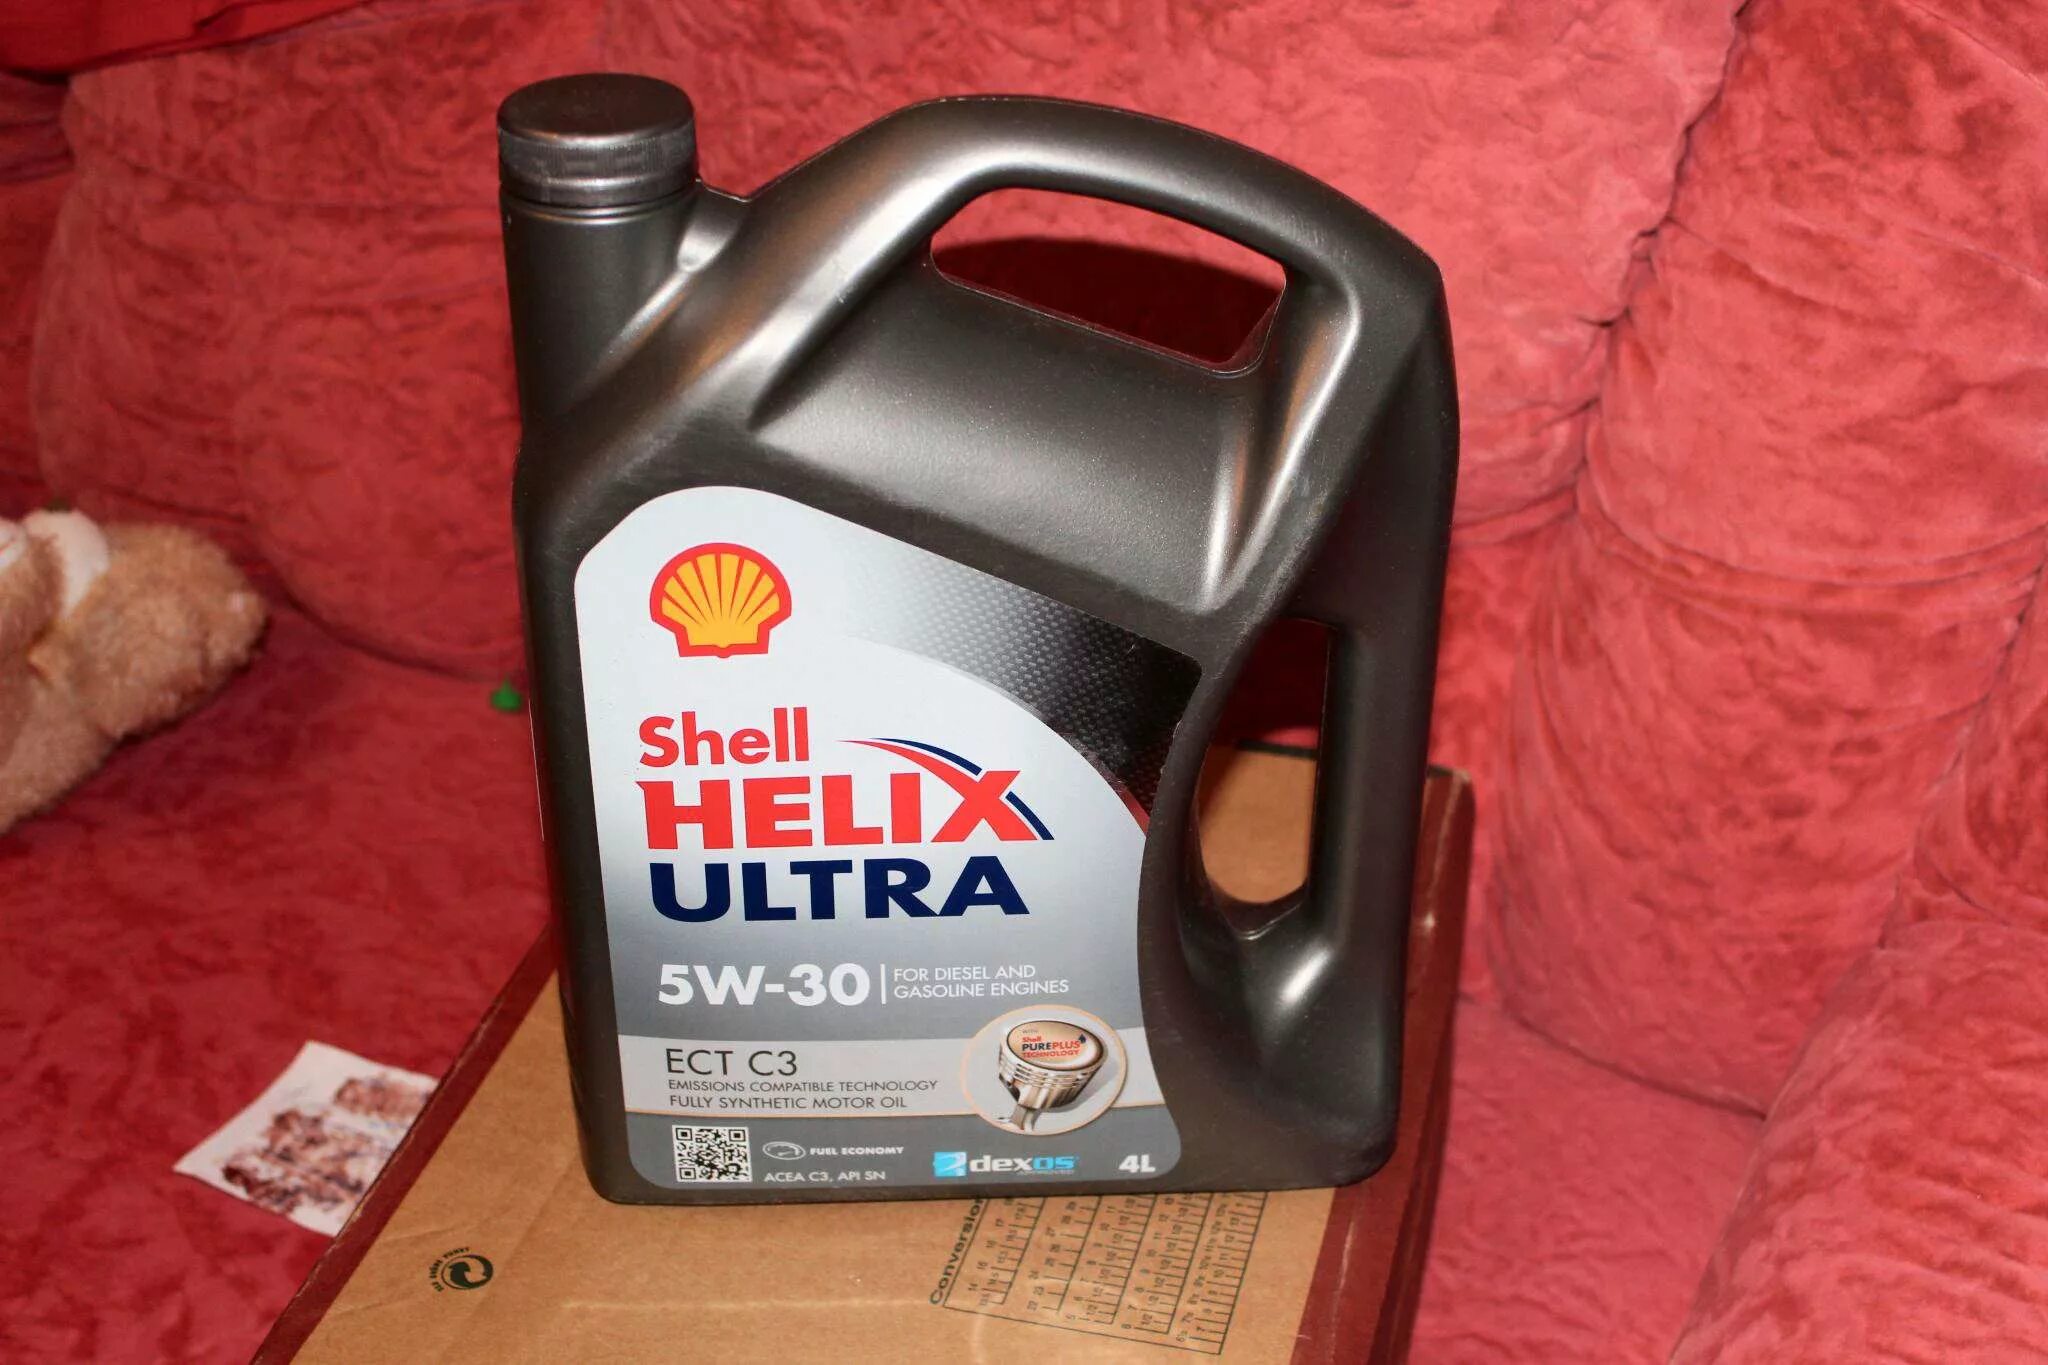 Shell Helix Ultra 5w30 ect Ah 4л. Shell Helix 5w30 ect. Shell Helix Ultra 5w30 ect c3 4. Shell 5w30 ect c3. Масло shell helix ultra ect 5w 30